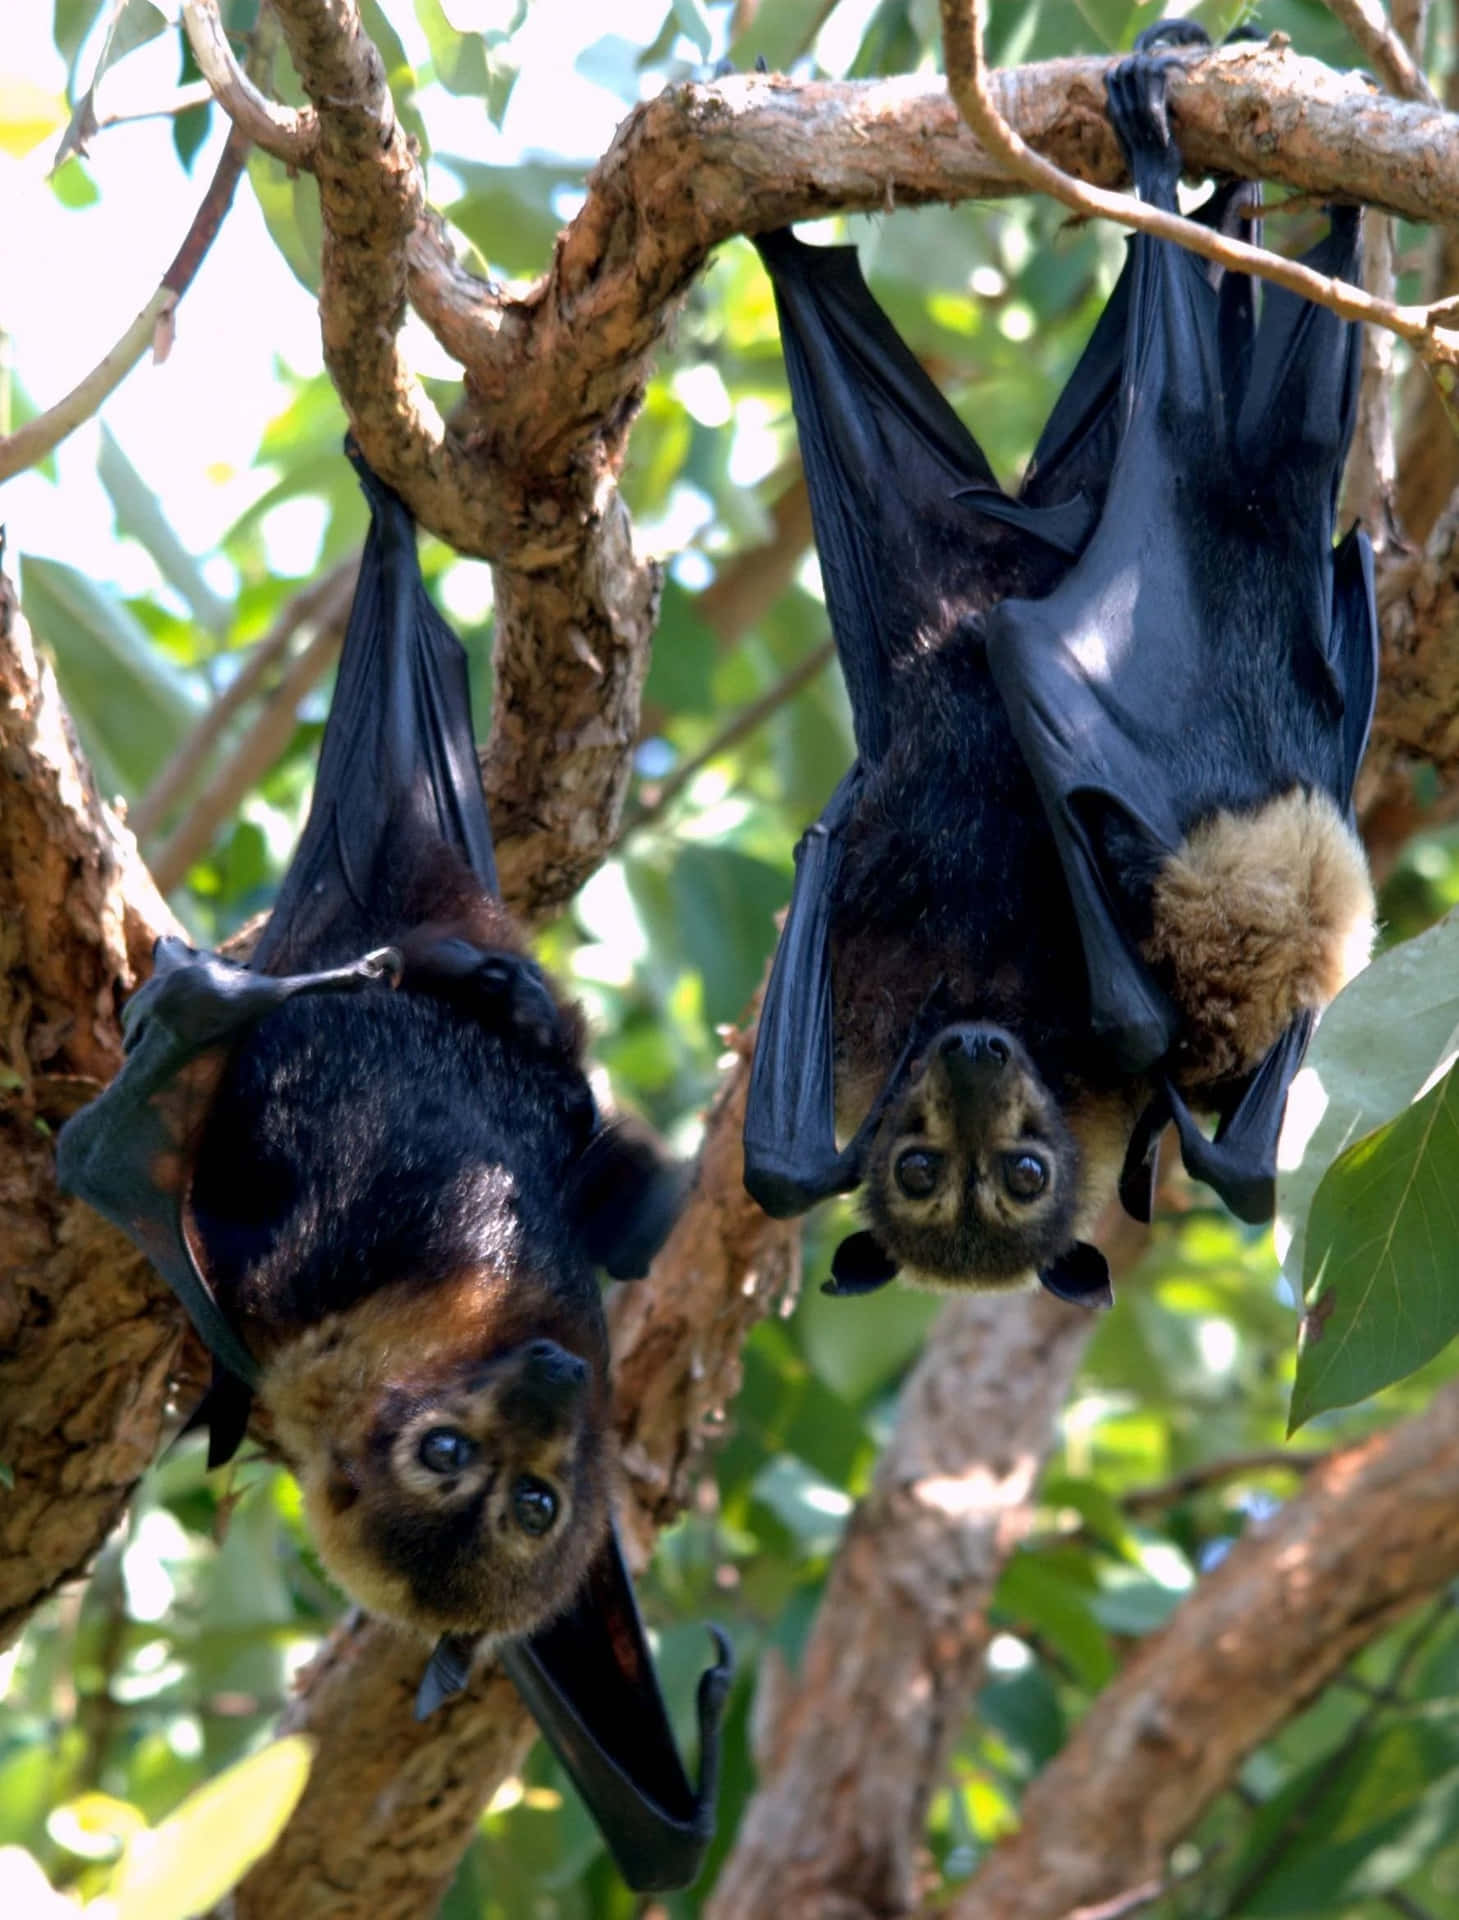 Astonishing Close-up Image of Fruit Bats in their Natural Habitat